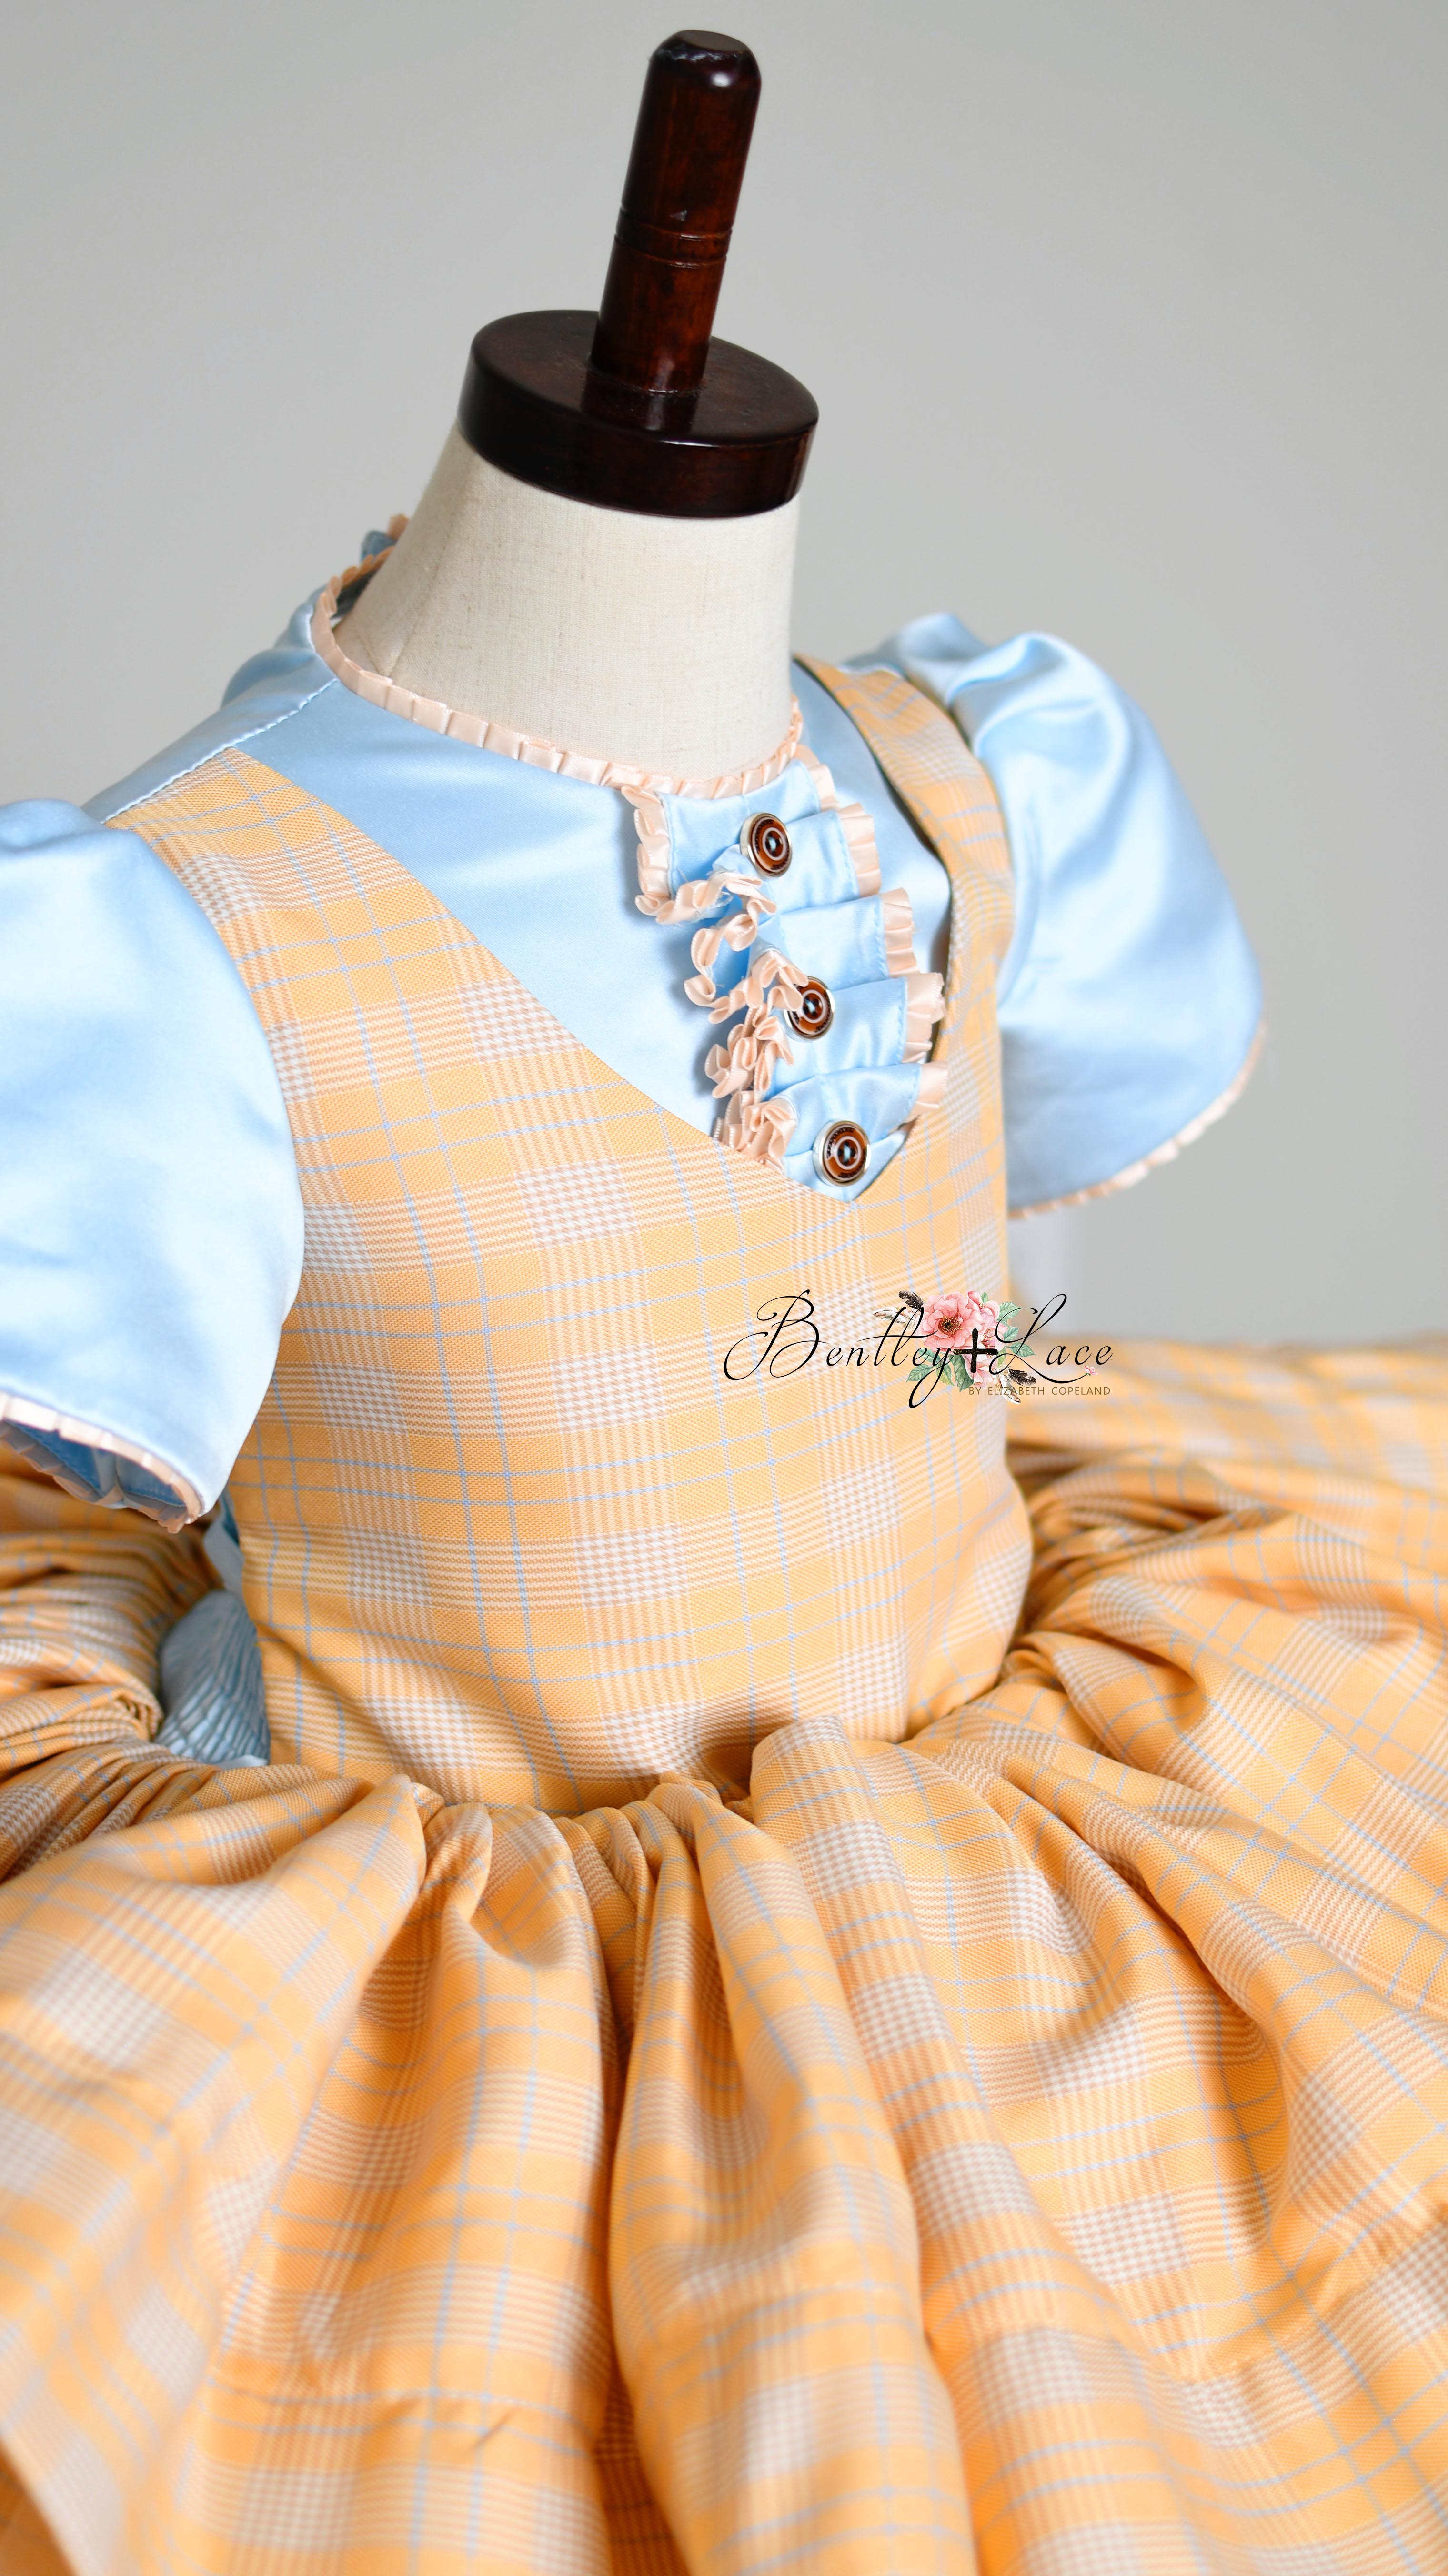 "Bluebird Breeze" Vintagte Petal Dress - Editorial Dress, Couture Gown, Special Occasion Dress